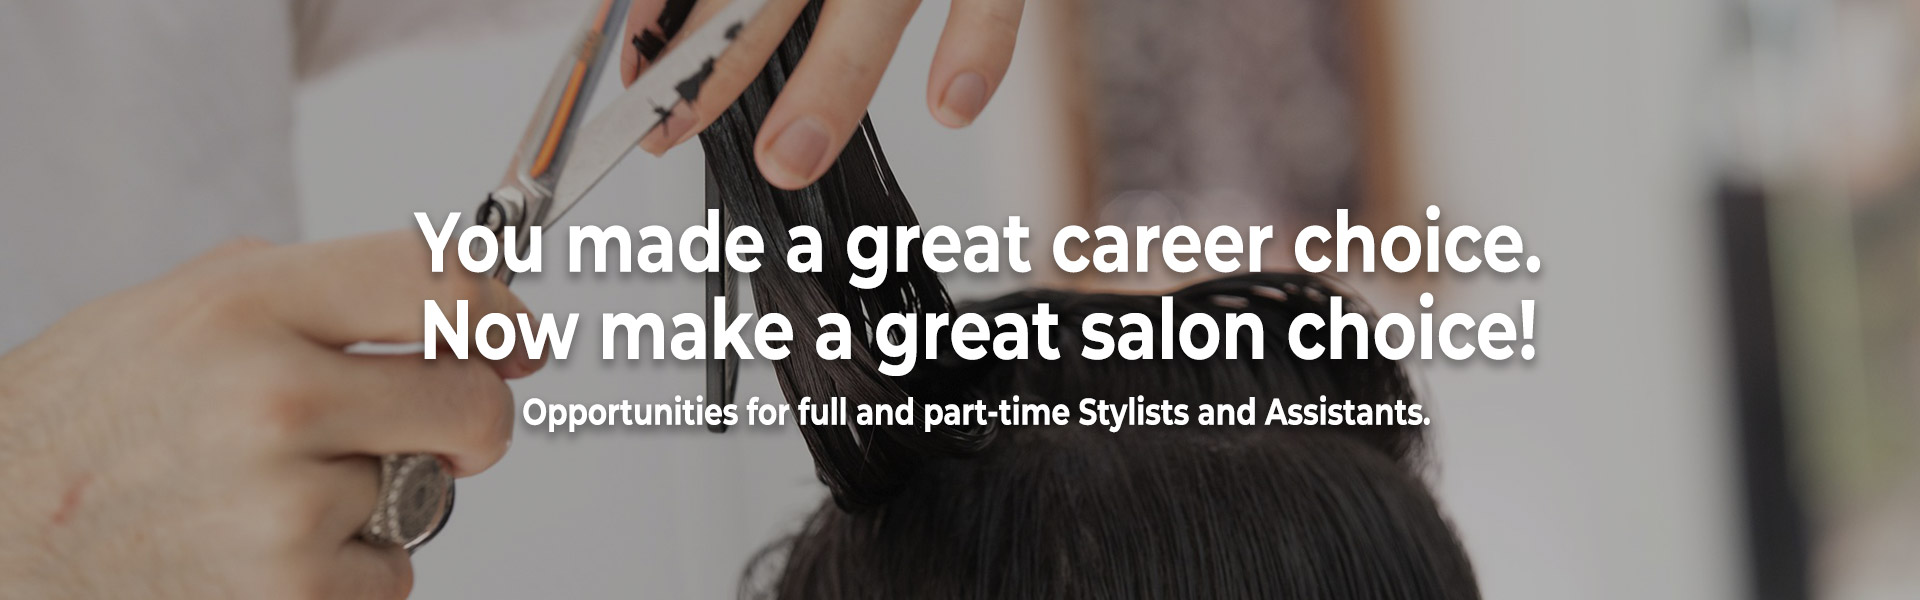 Element Hair salon is hiring